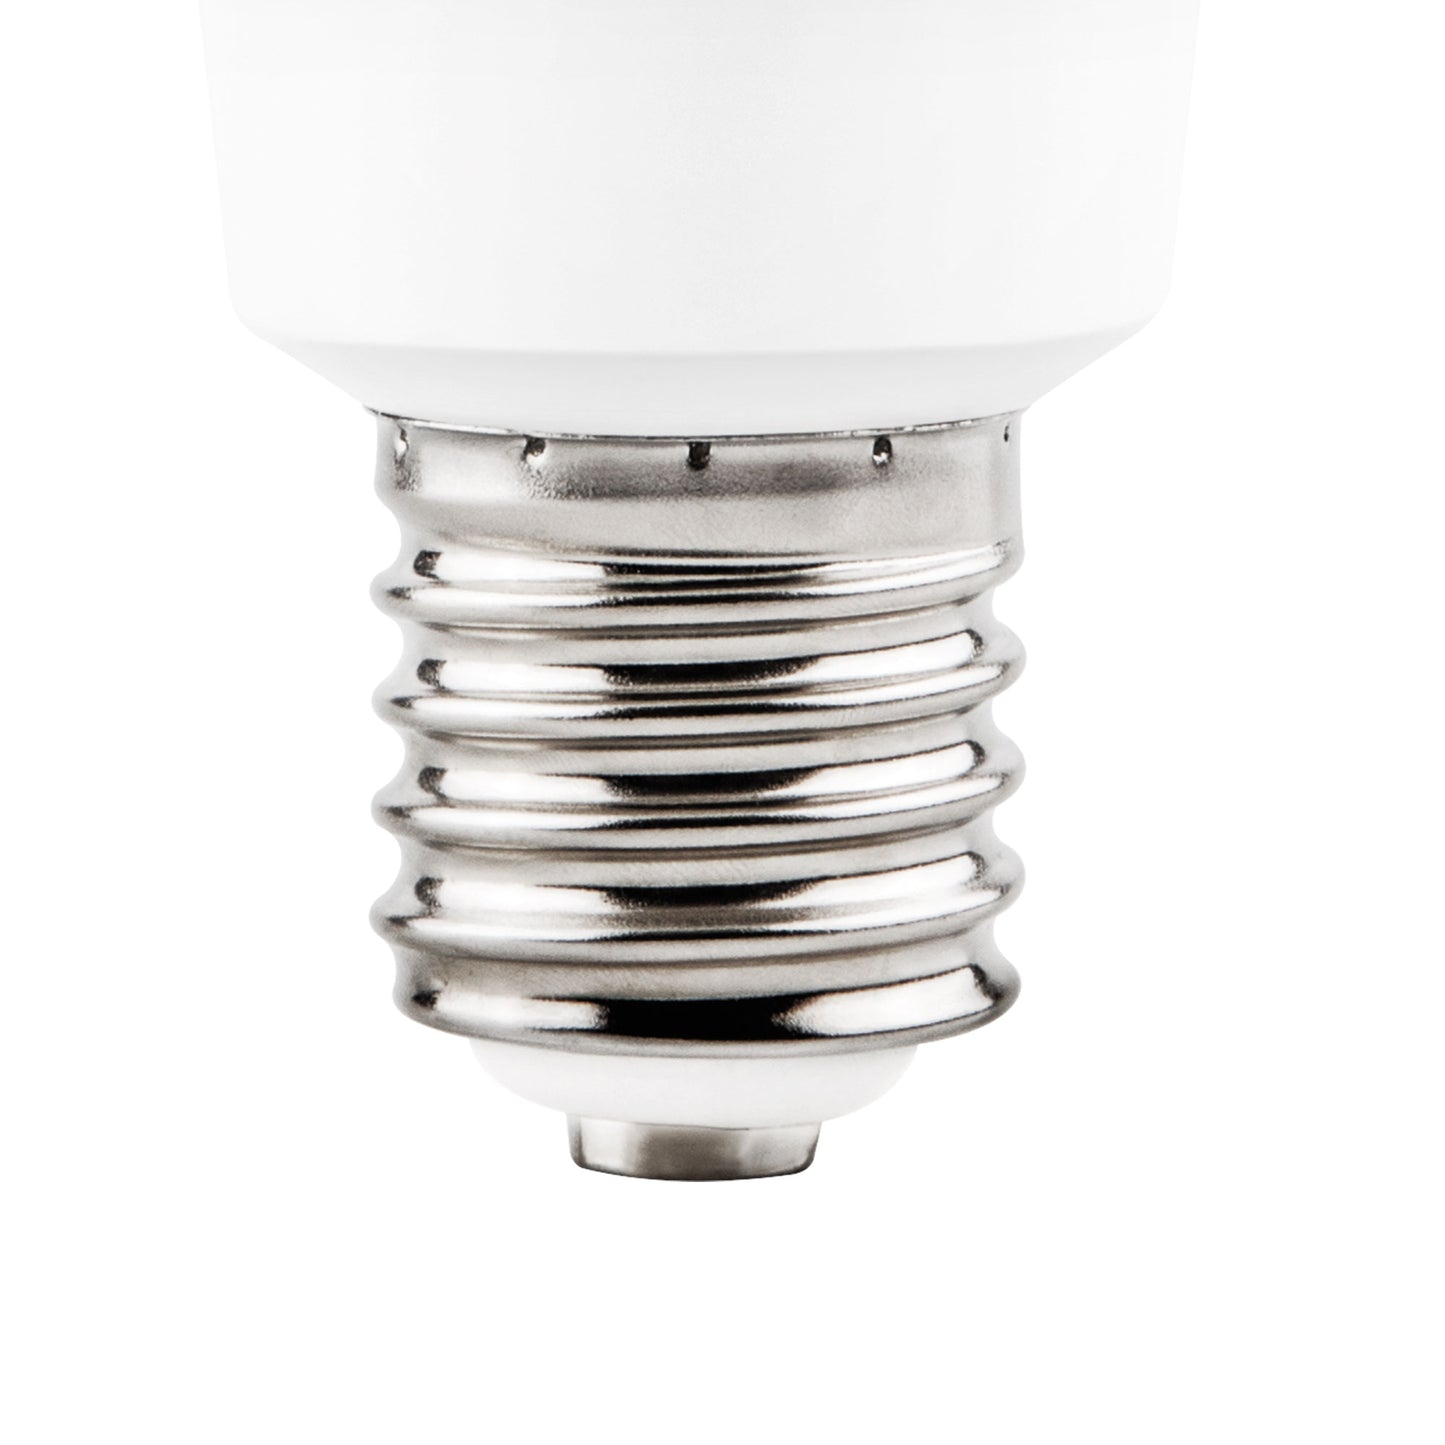 LAMPE LED INDUSTRIELLE E40 50W 70W R150 R170 120º 230V AC 